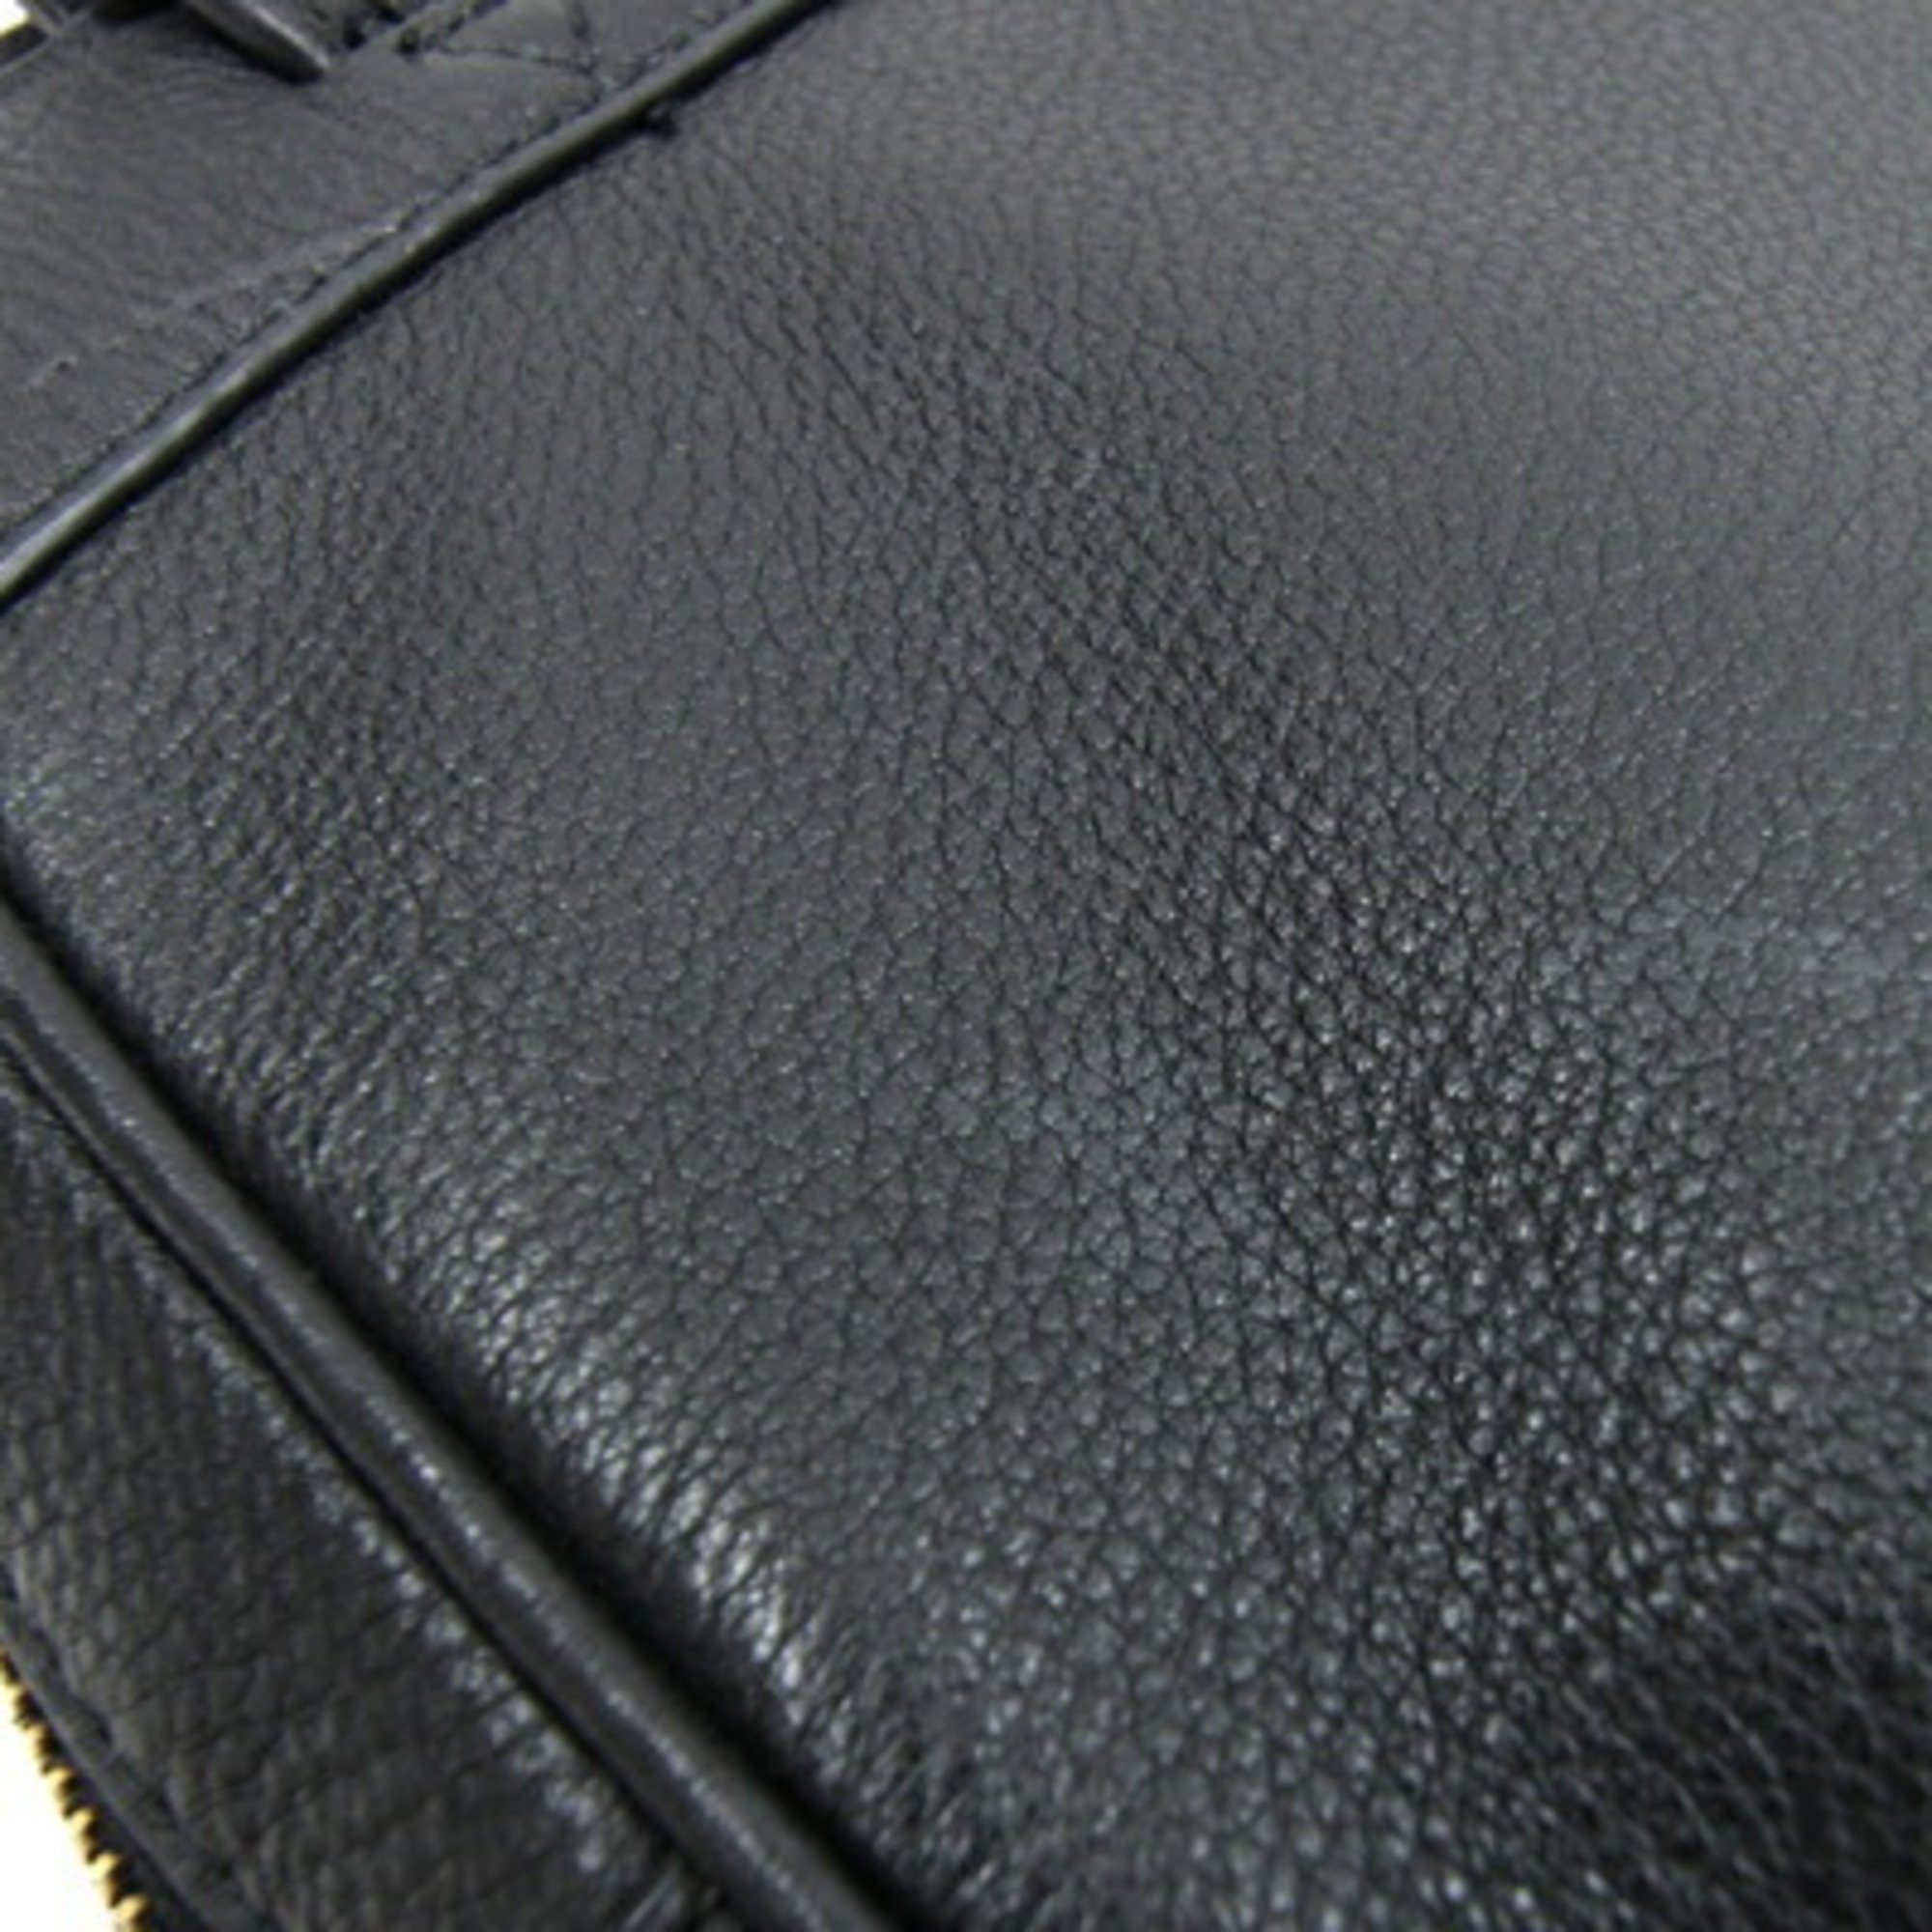 Michael Kors Backpack 30S5GEZB1L Black Leather Women's MICHAEL KORS